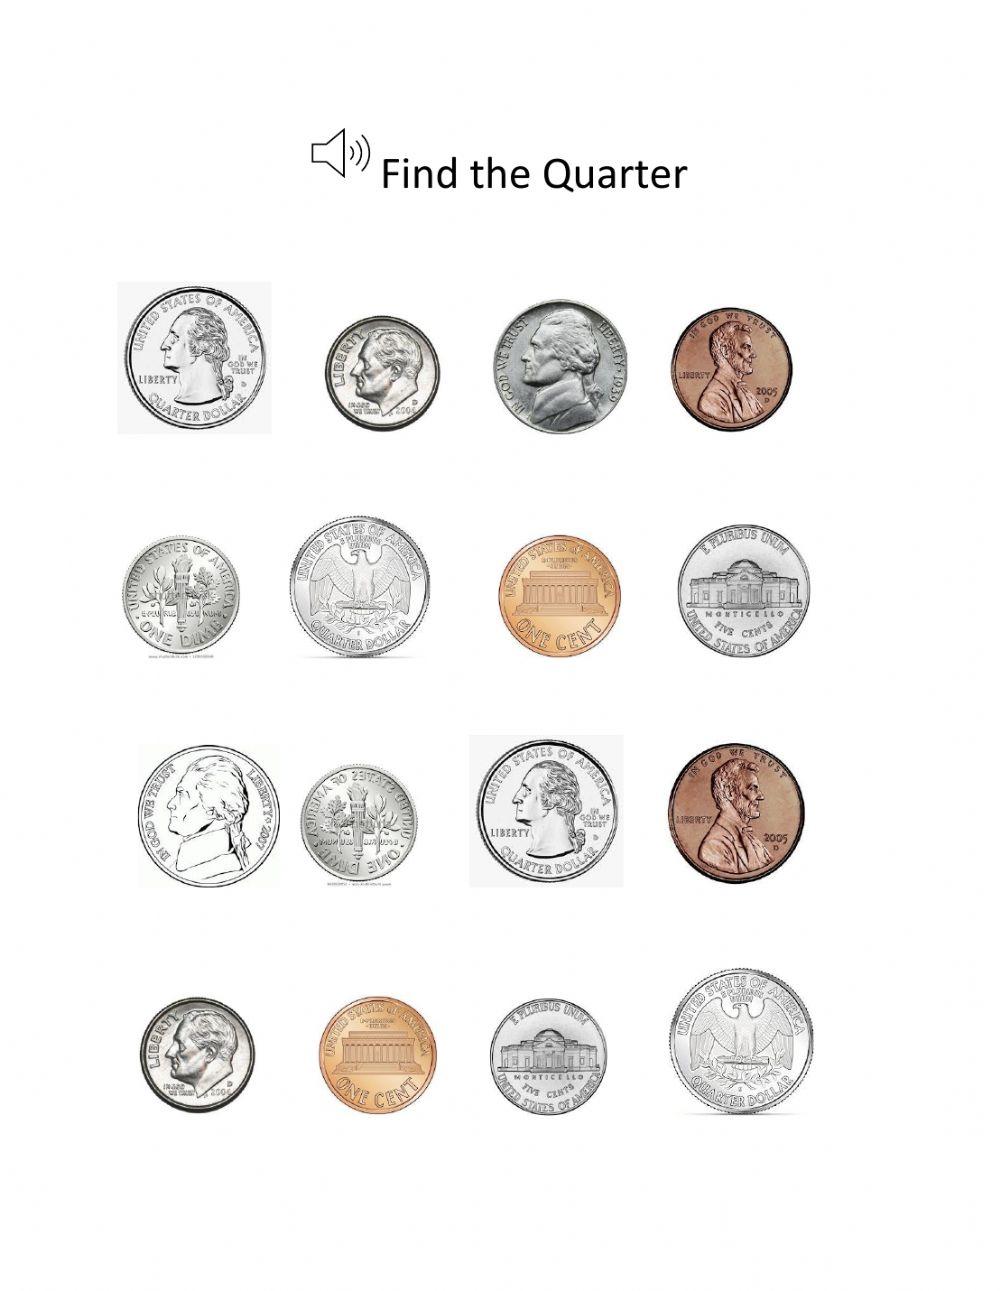 Find the quarter